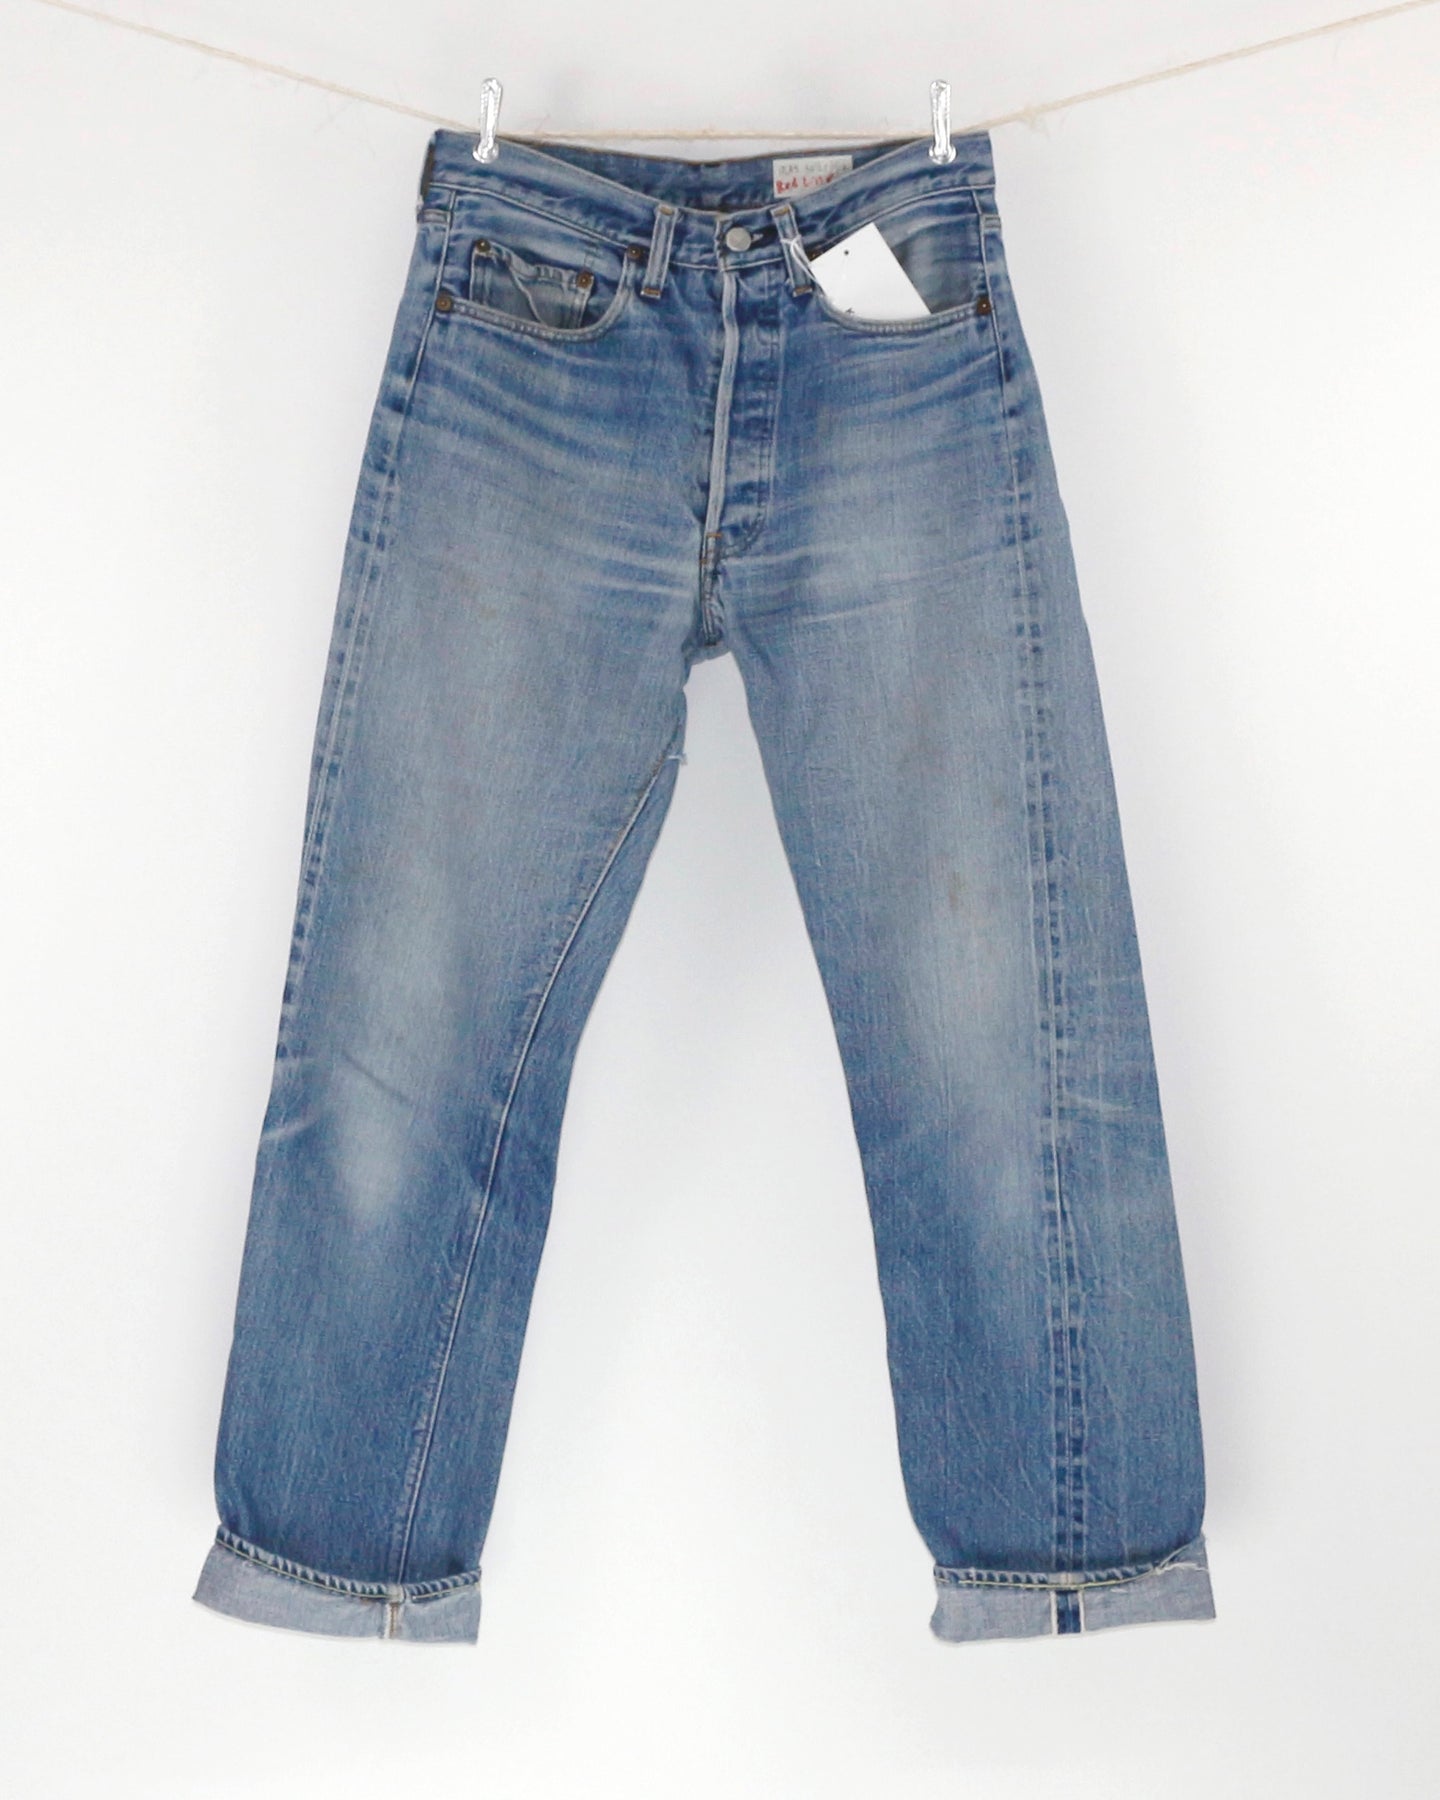 Vintage Levi’s 501 Selvedge denim/Single needle back pockets, Men's waist 31